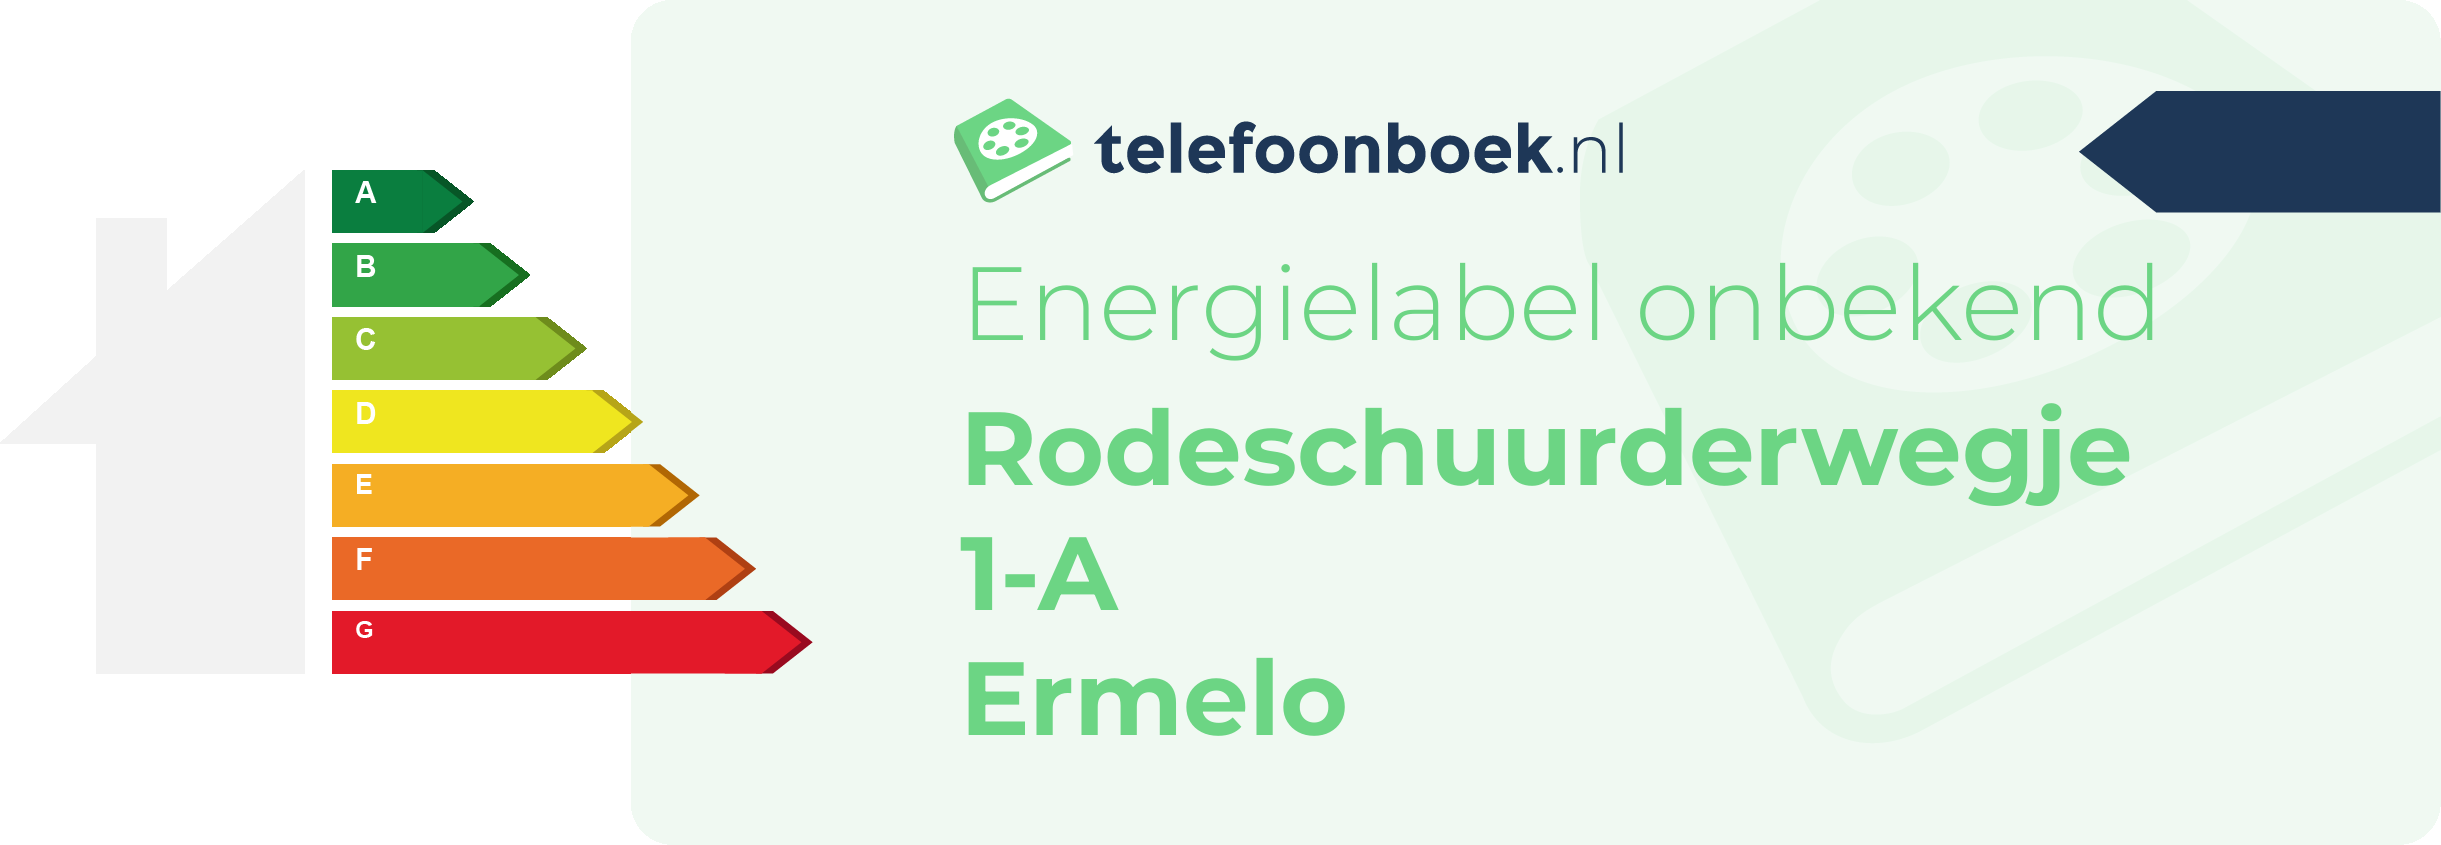 Energielabel Rodeschuurderwegje 1-A Ermelo